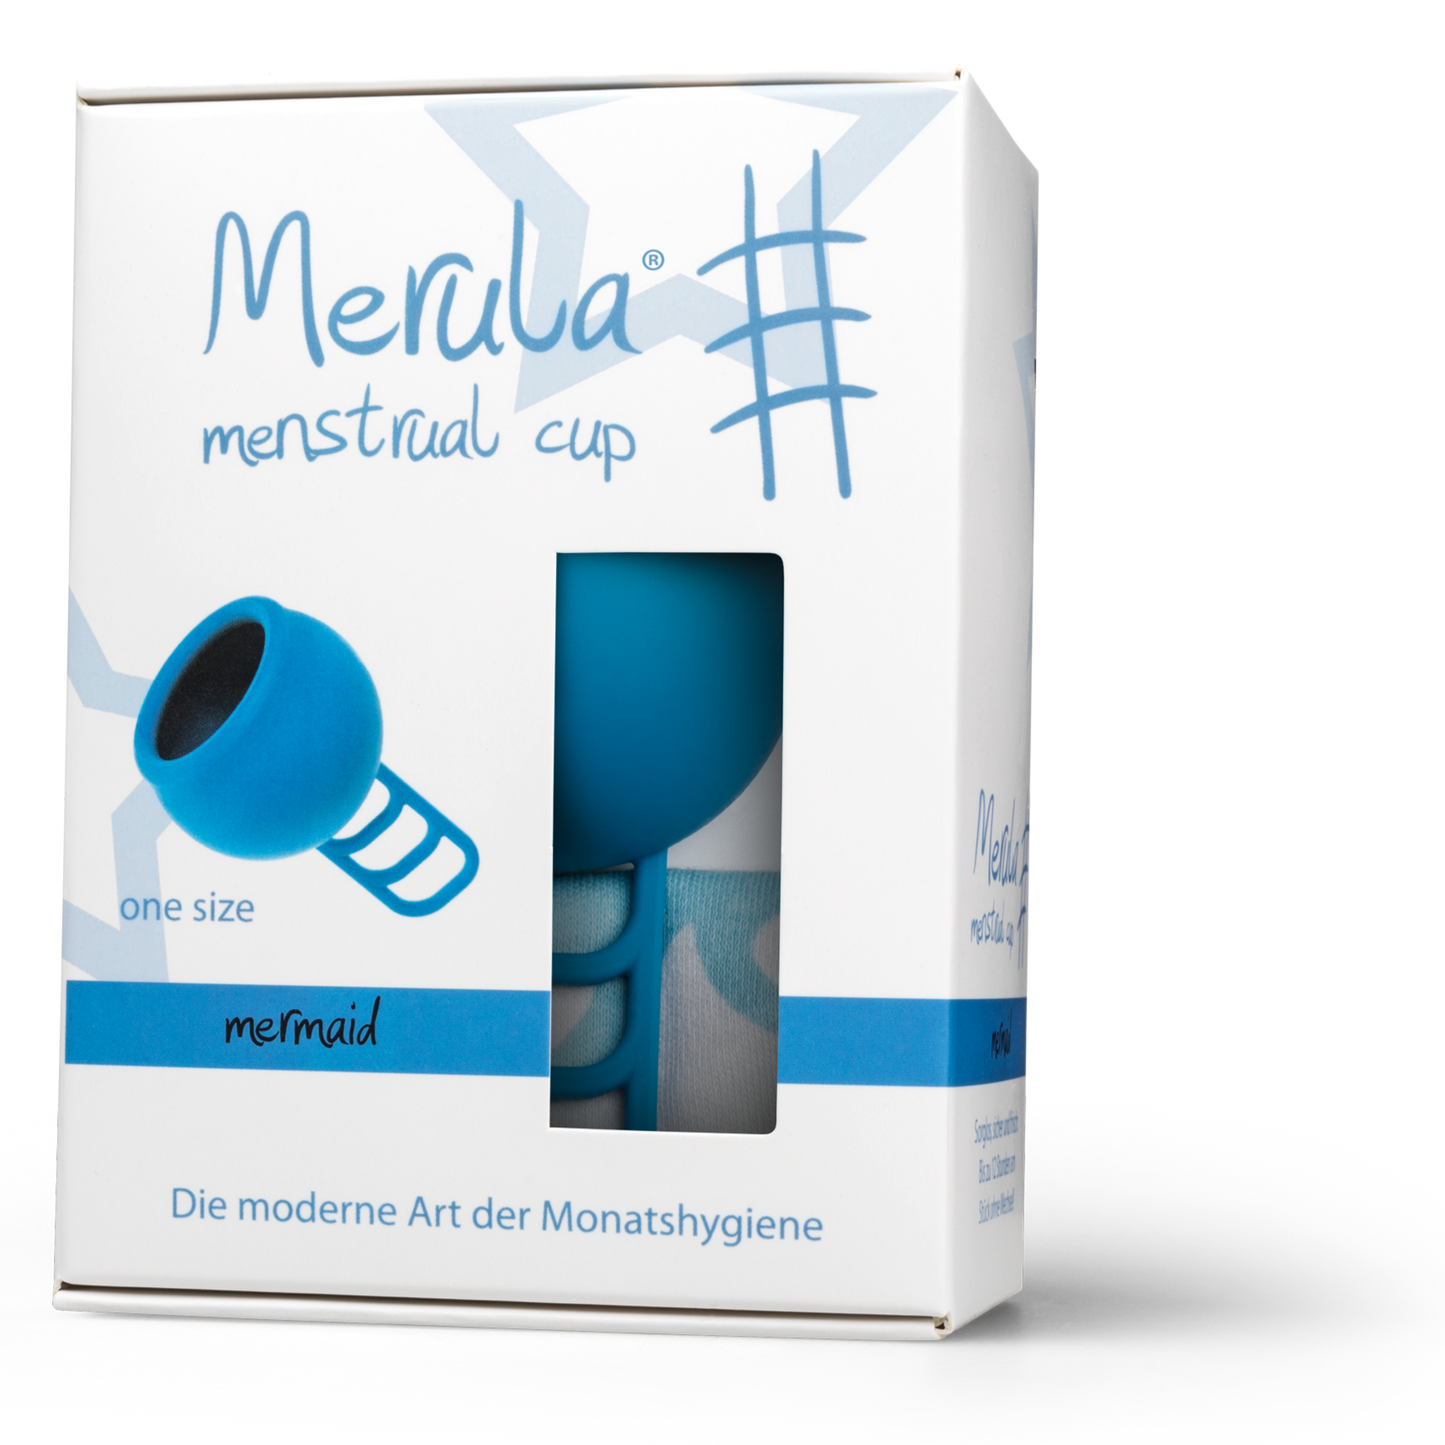 Merula OS mermaid cup 